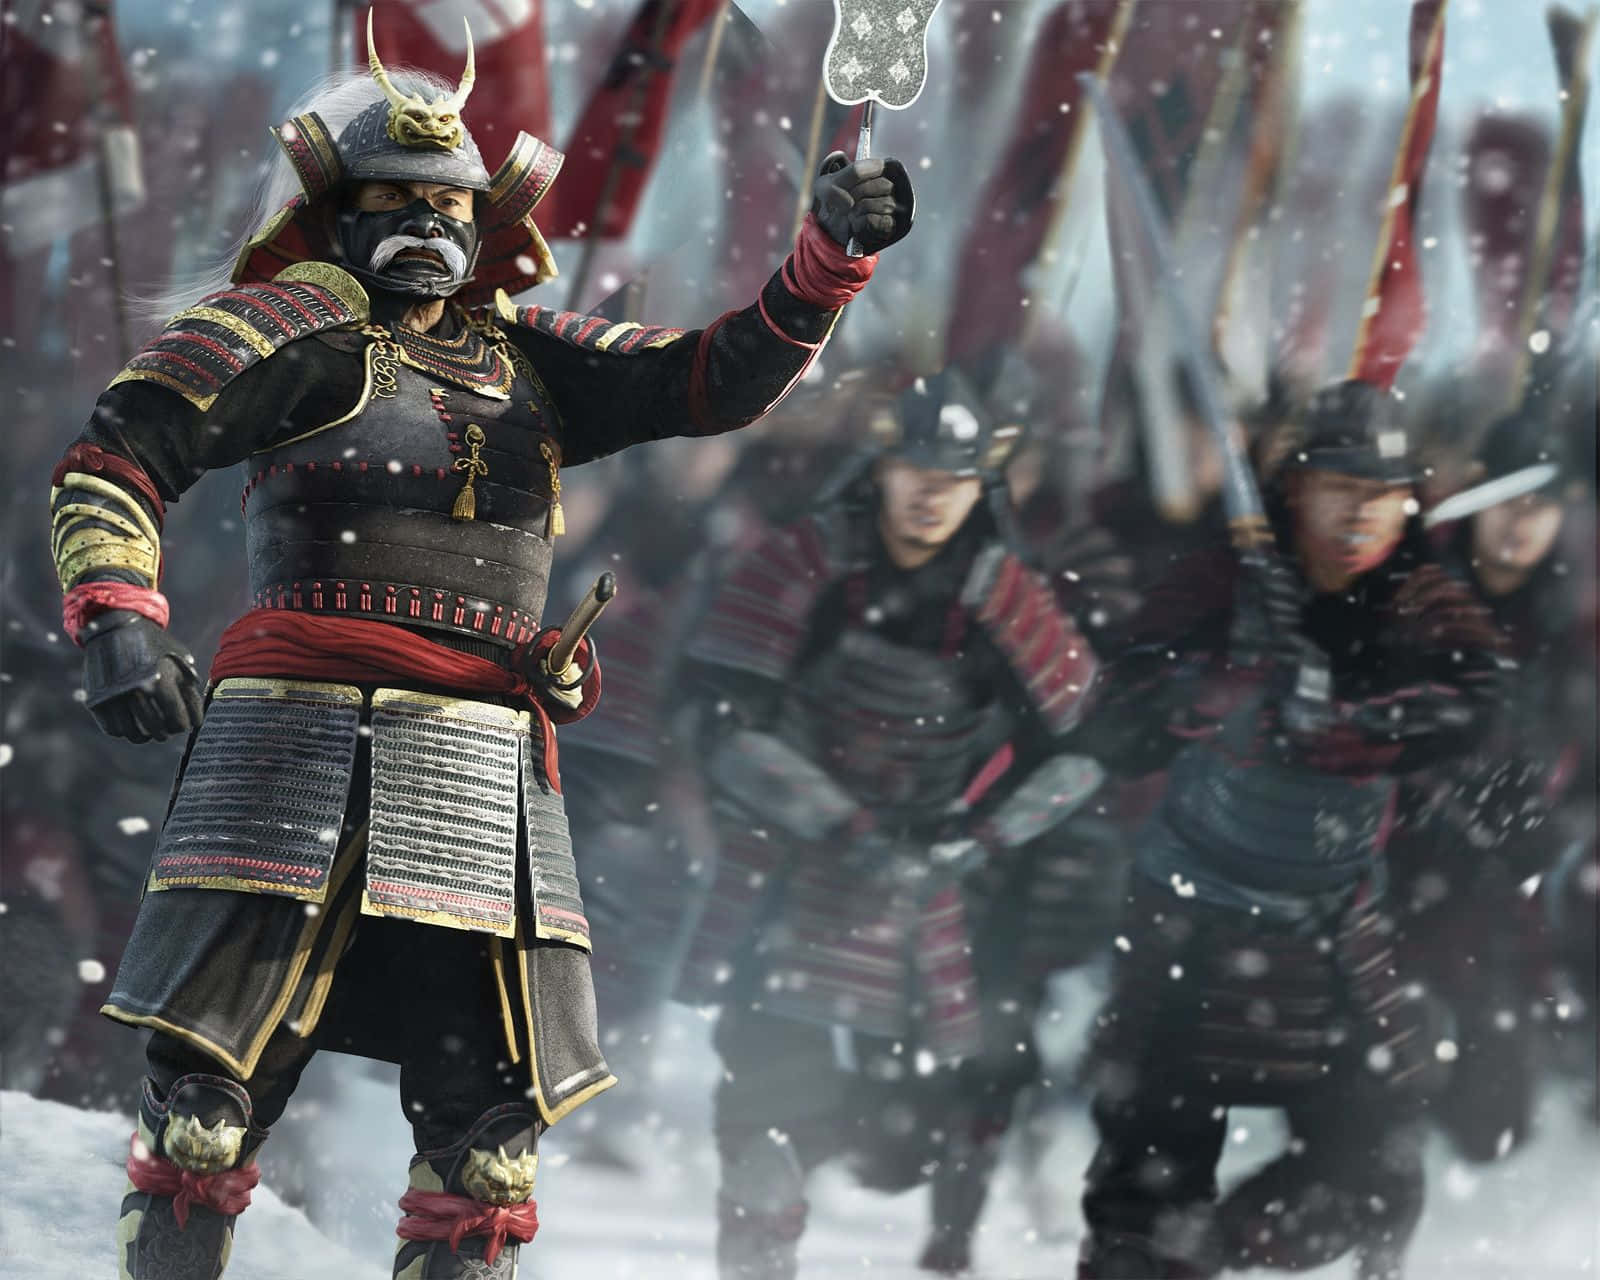 Epic Battle Scene in Shogun Total War Wallpaper